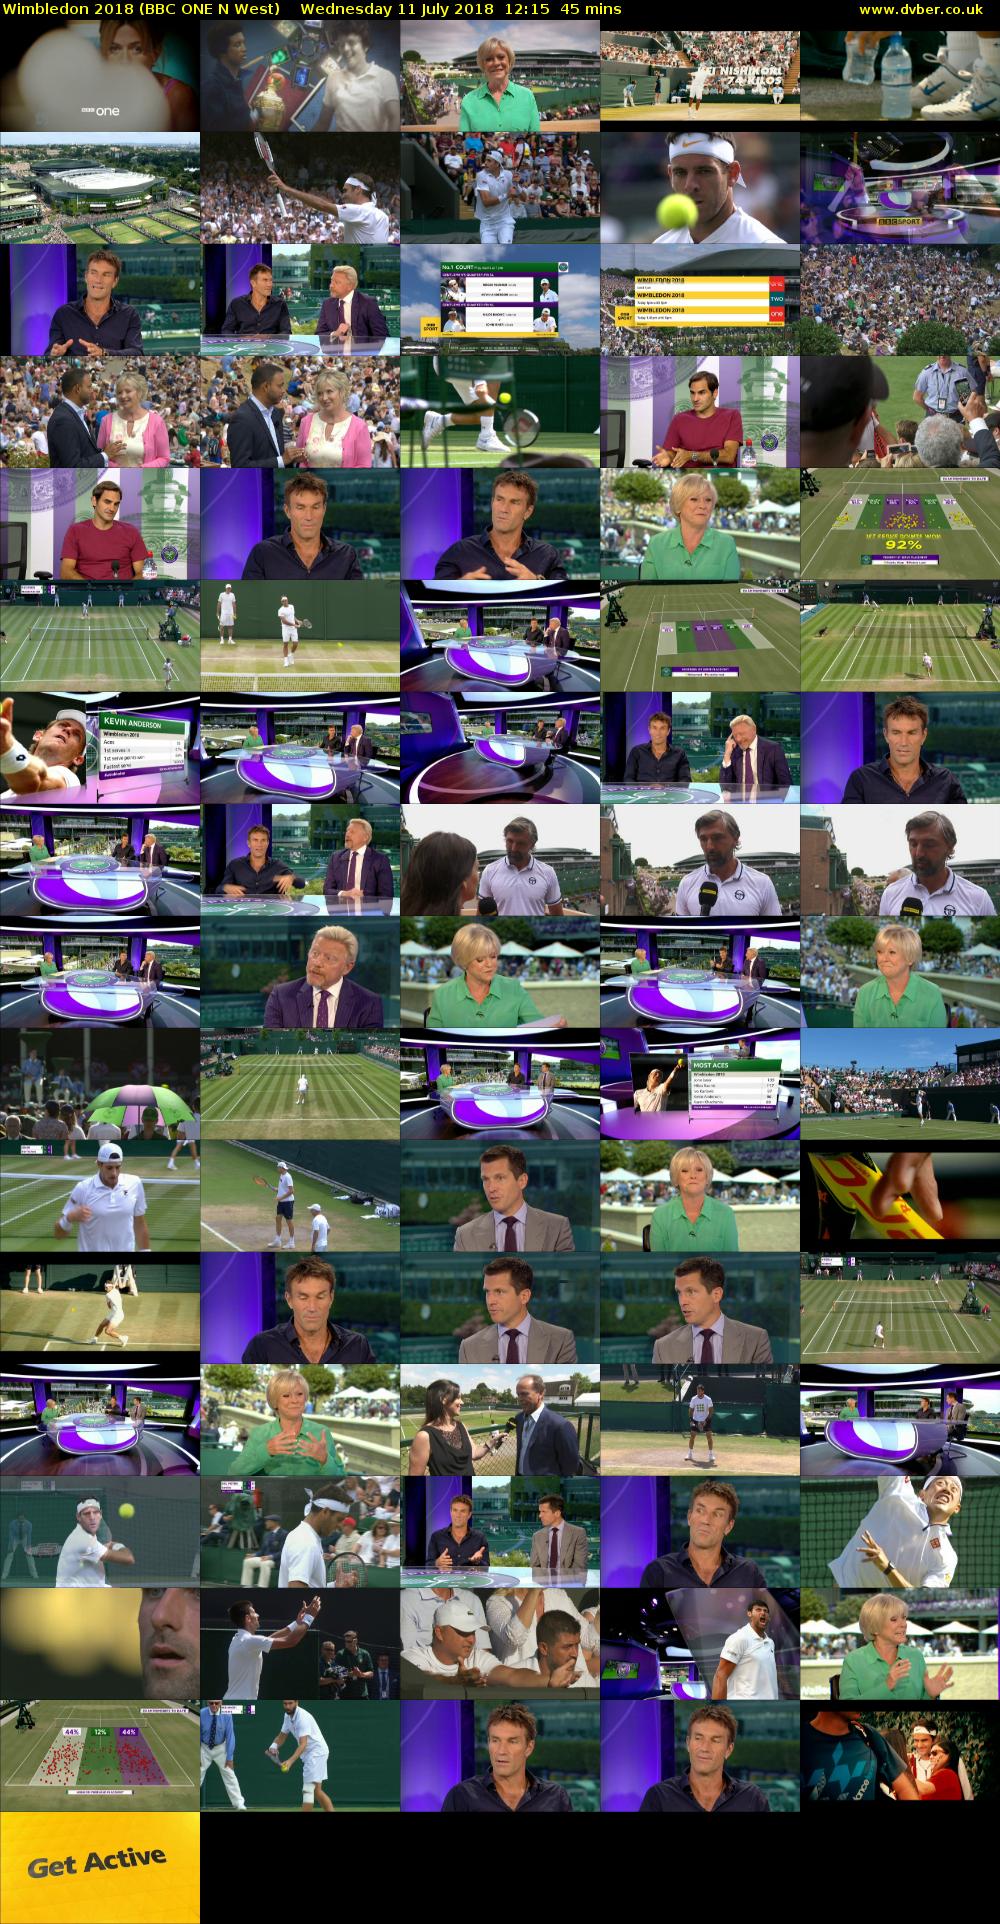 Wimbledon 2018 (BBC ONE N West) Wednesday 11 July 2018 12:15 - 13:00